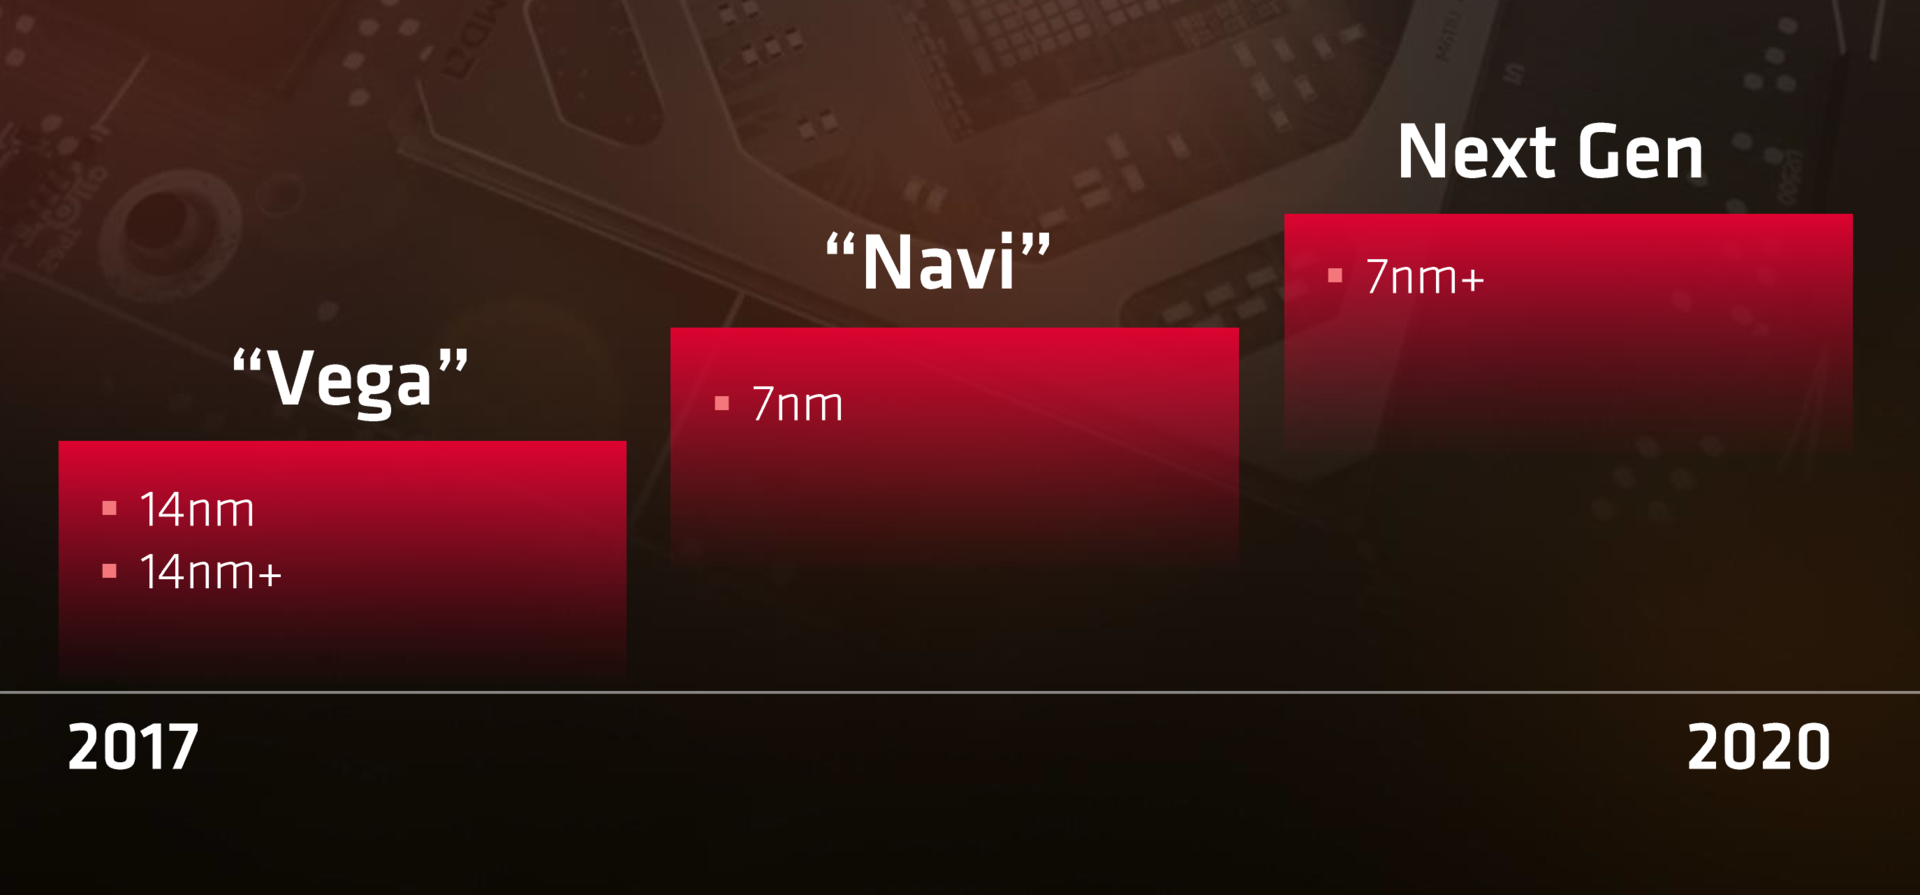 Driver code confirms AMD's Navi GPU 